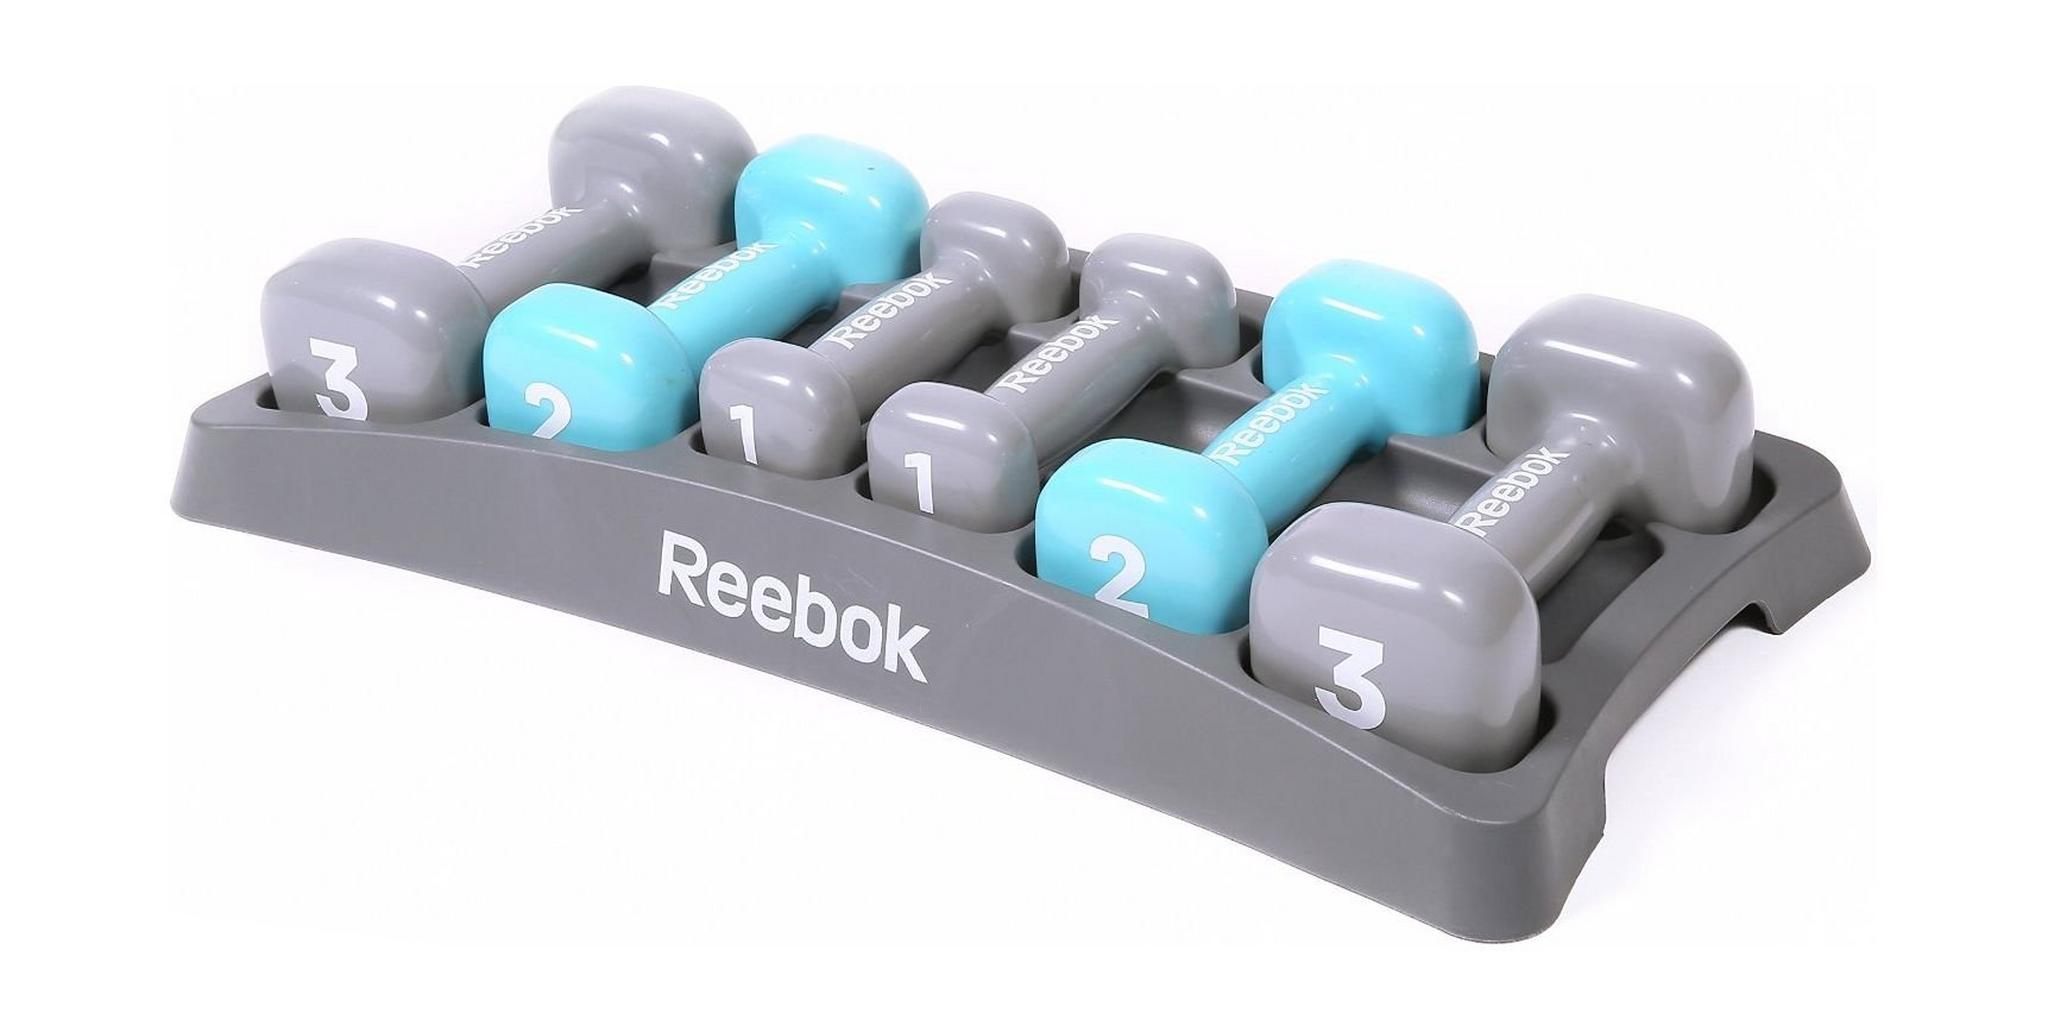 Reebok Dumbbell Set With Case (RAWT-11156) - Blue/Grey